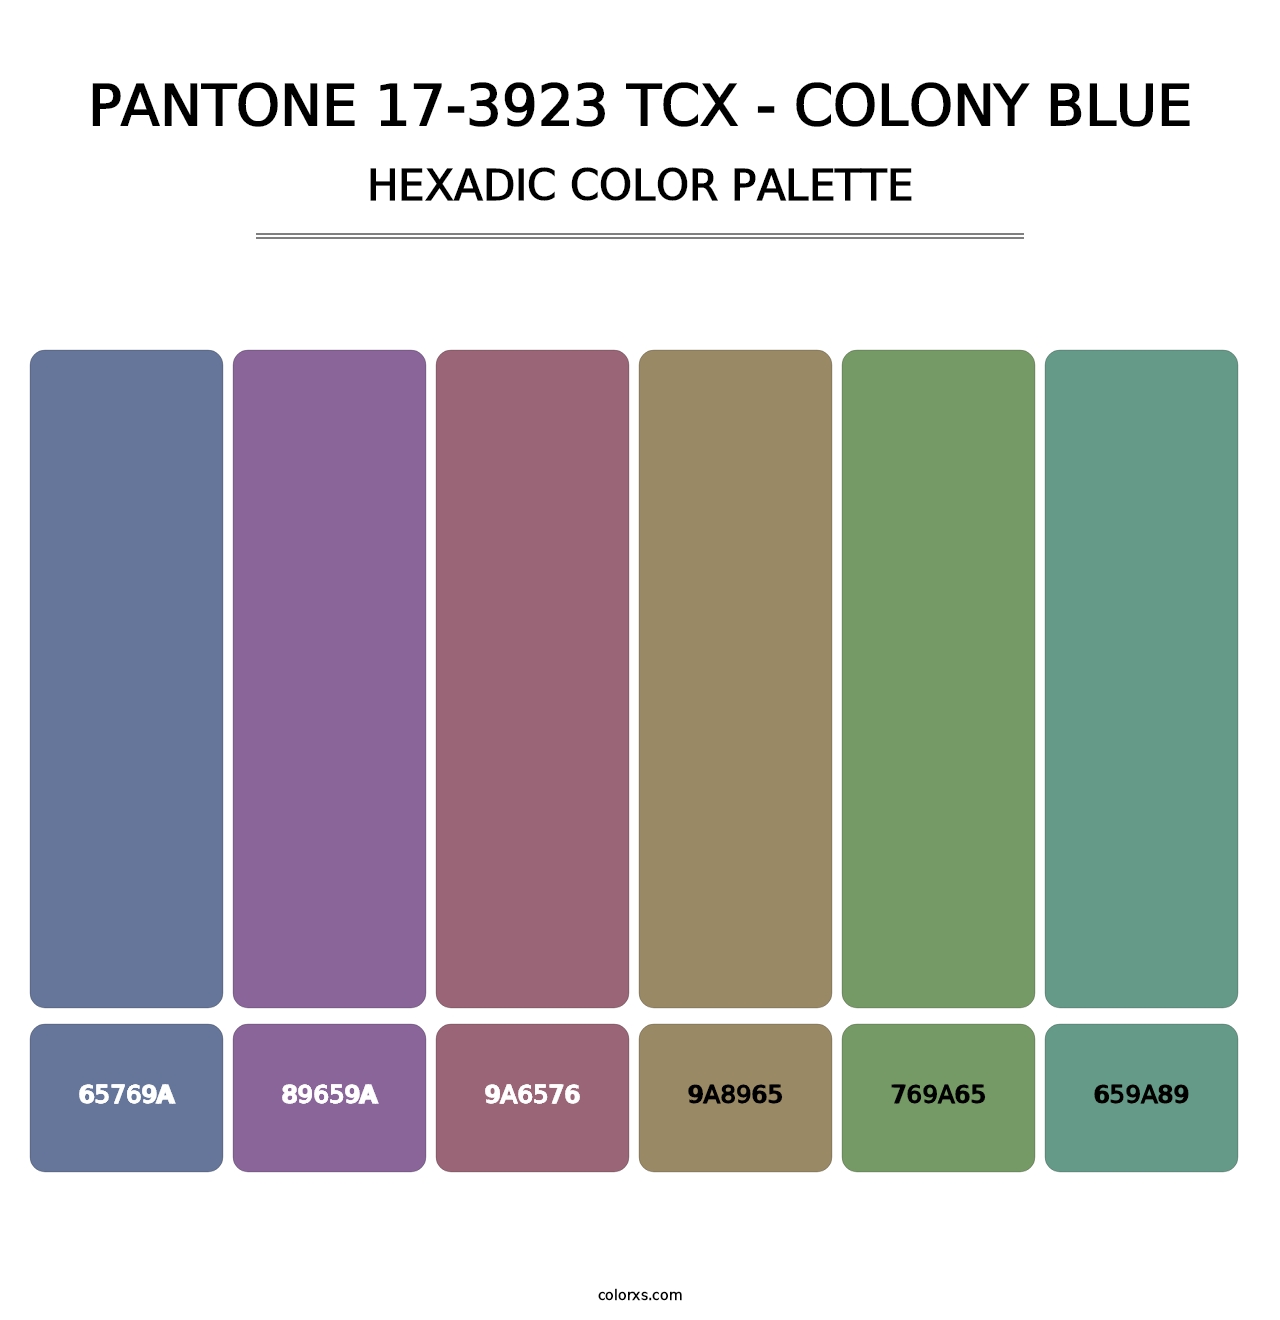 PANTONE 17-3923 TCX - Colony Blue - Hexadic Color Palette